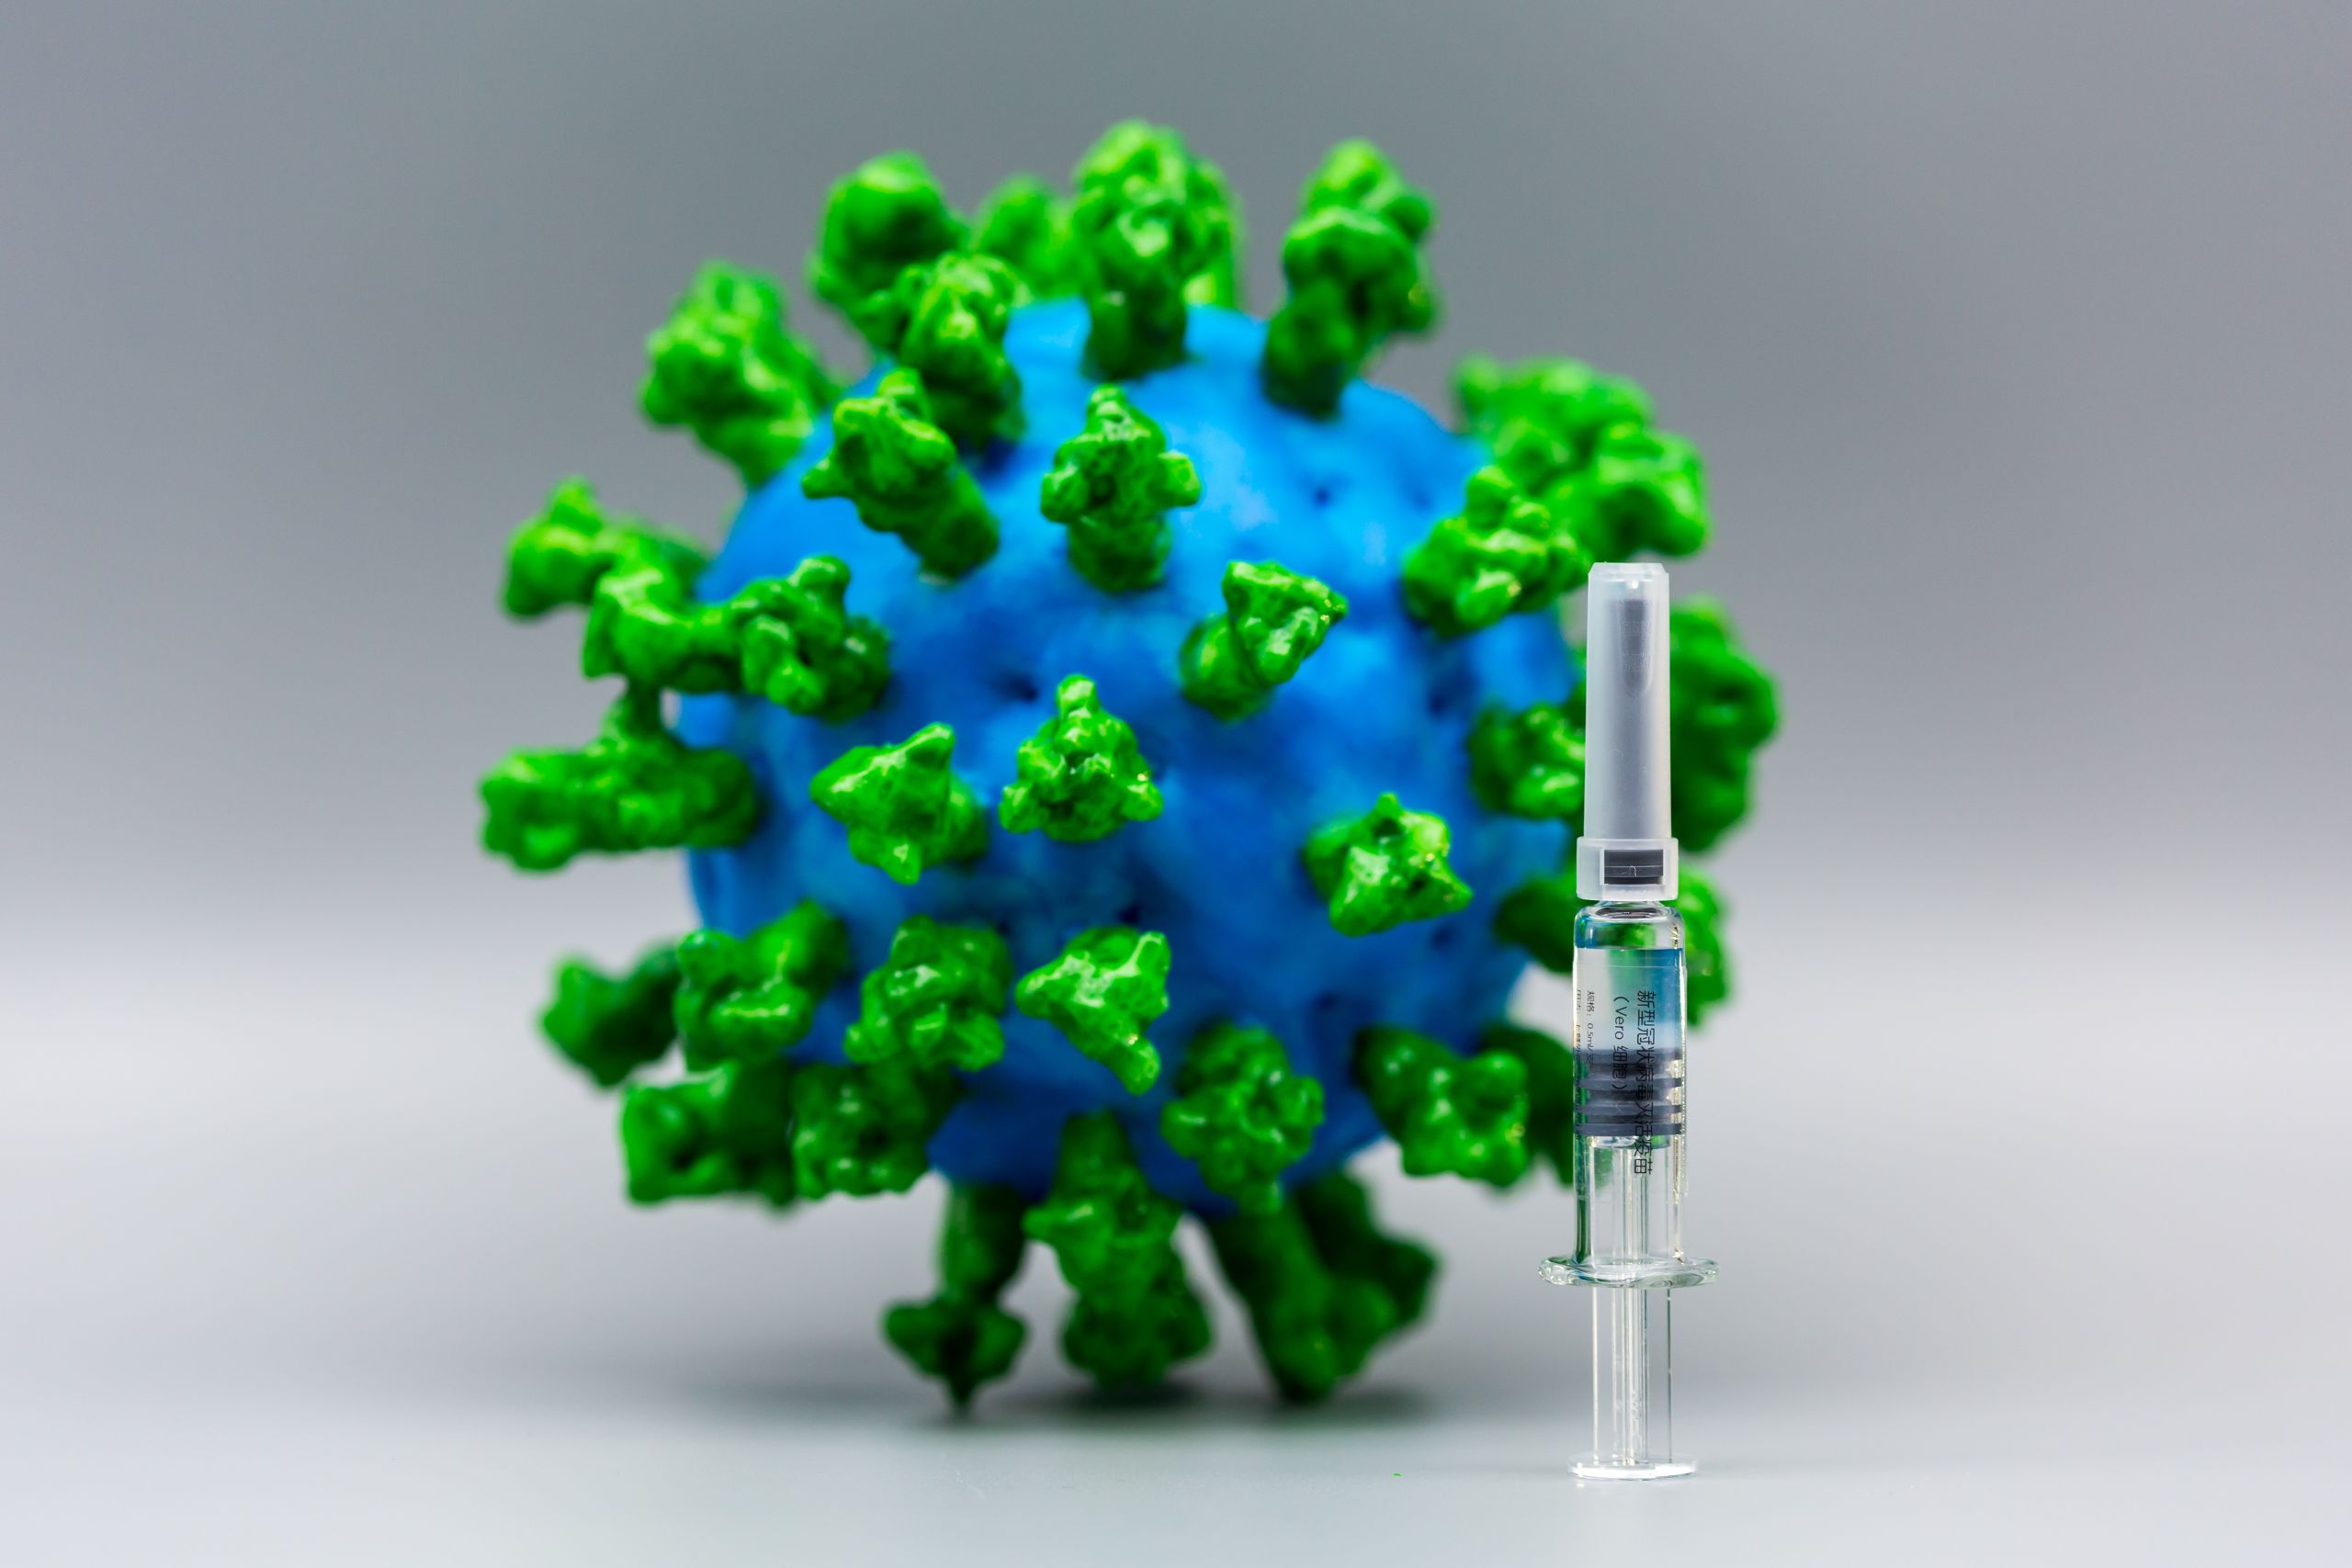 SARS-CoV-2 model and vaccine syringe